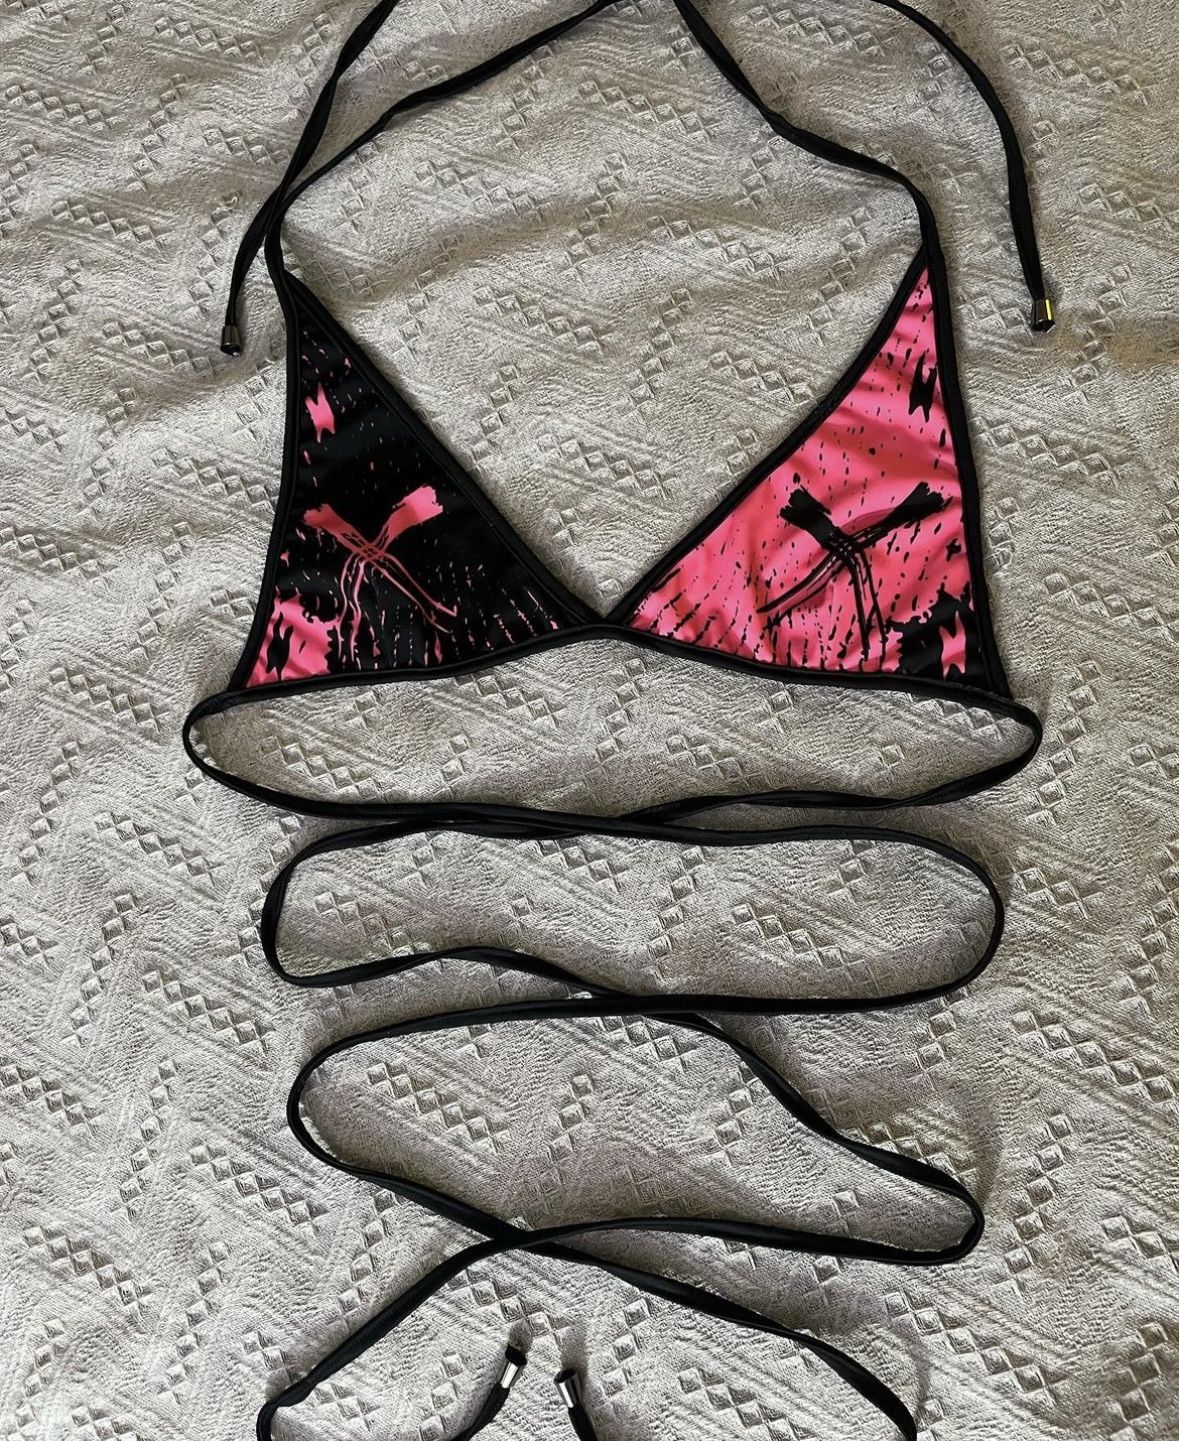 Strappy Bikini Rave Outfit